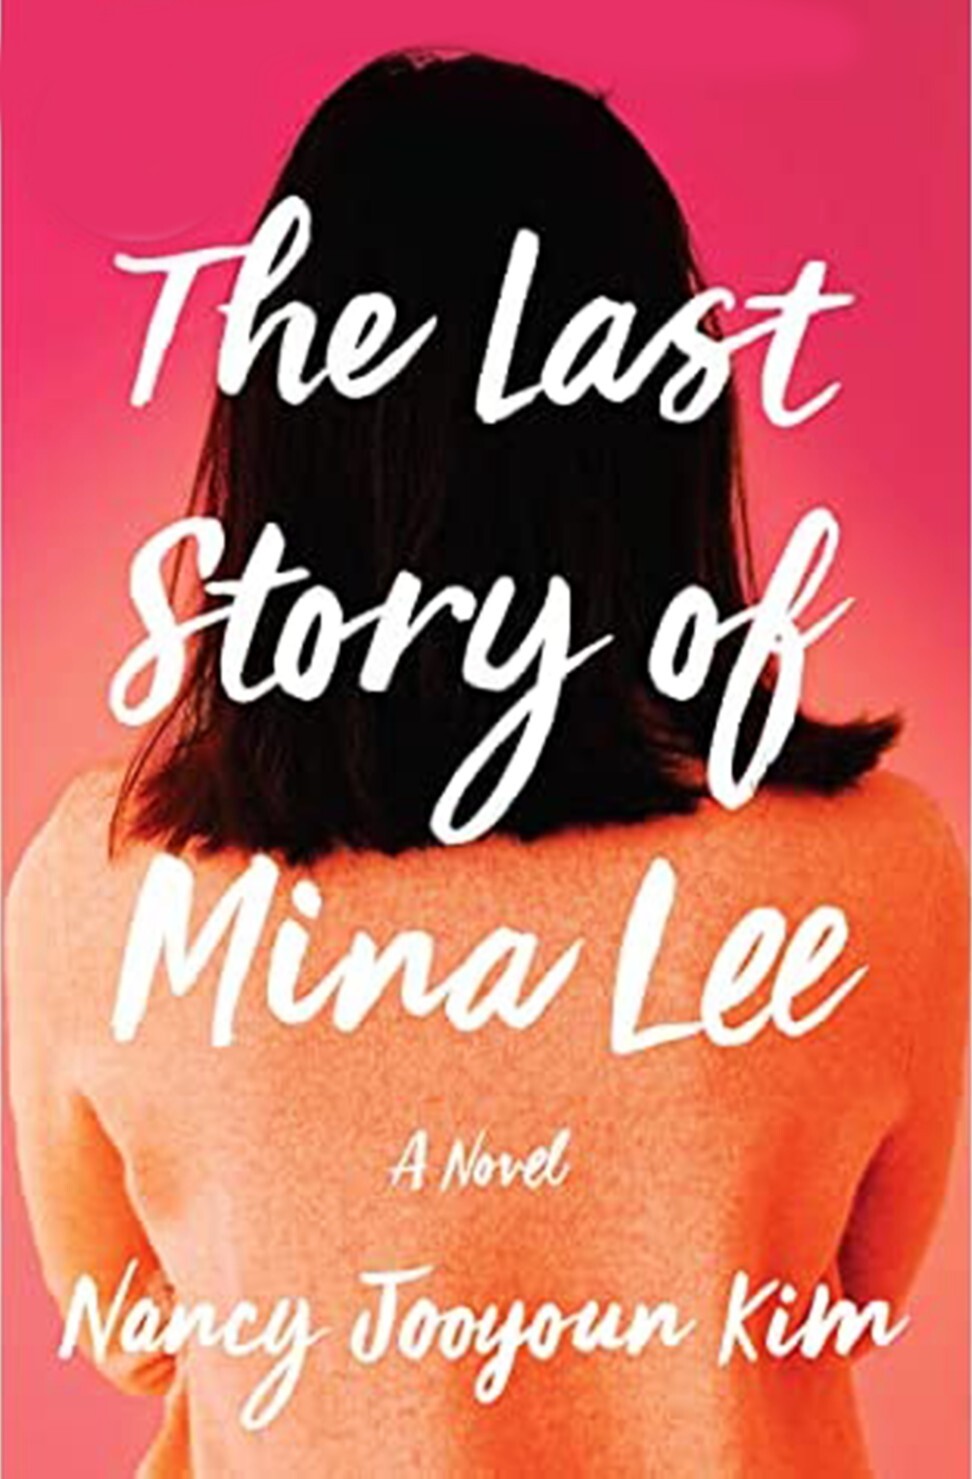 The Last Story of Mina Lee, by Nancy Jooyoun Kim. Photo: Handout